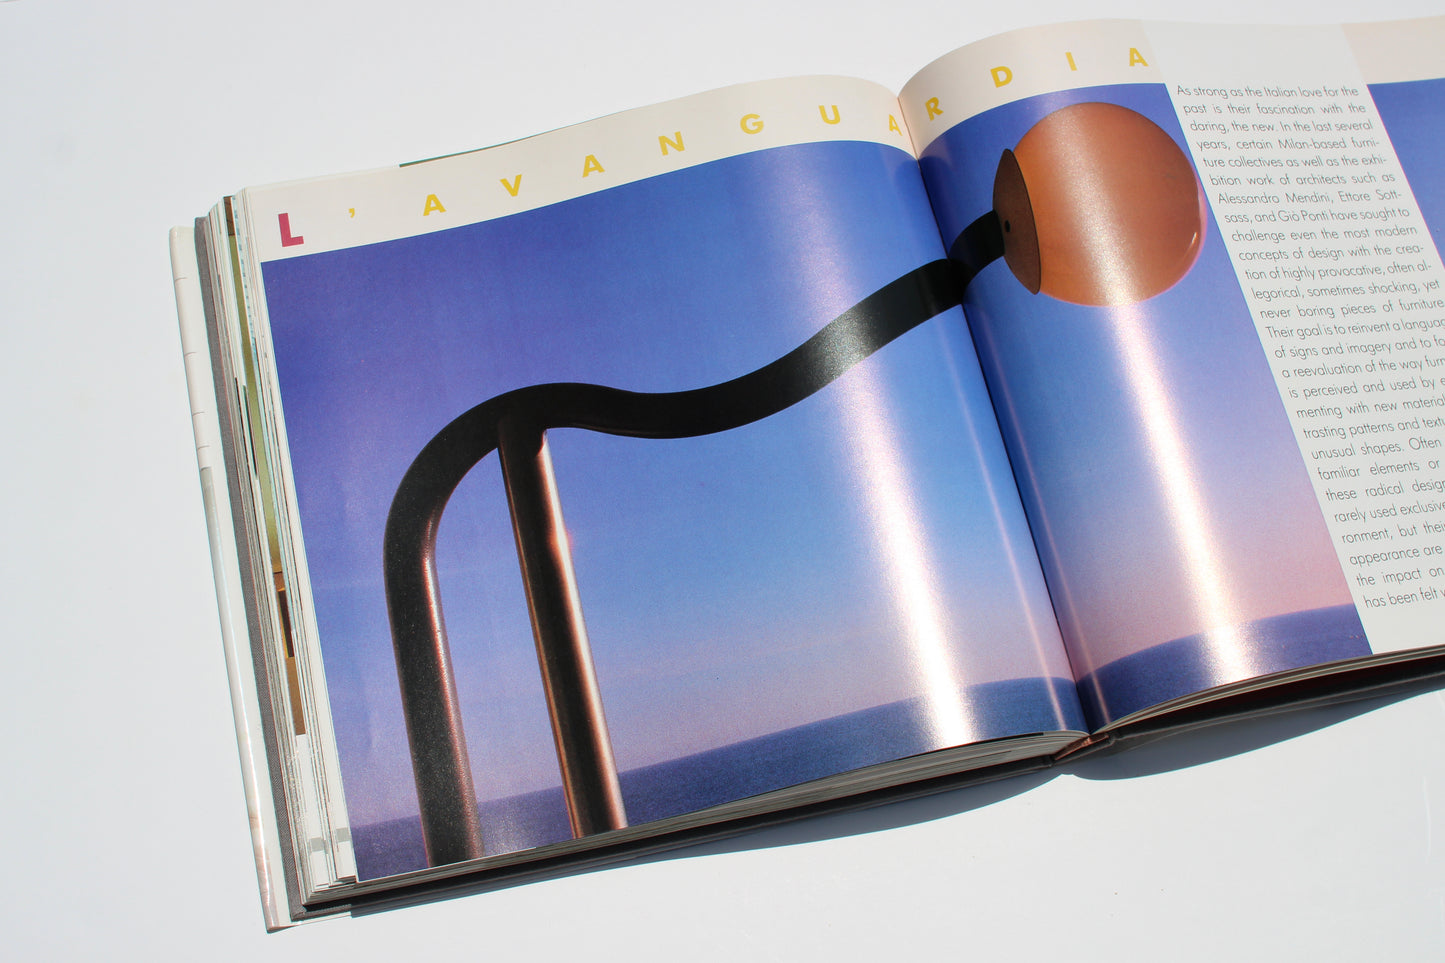 "Italian Style" 1980s design book